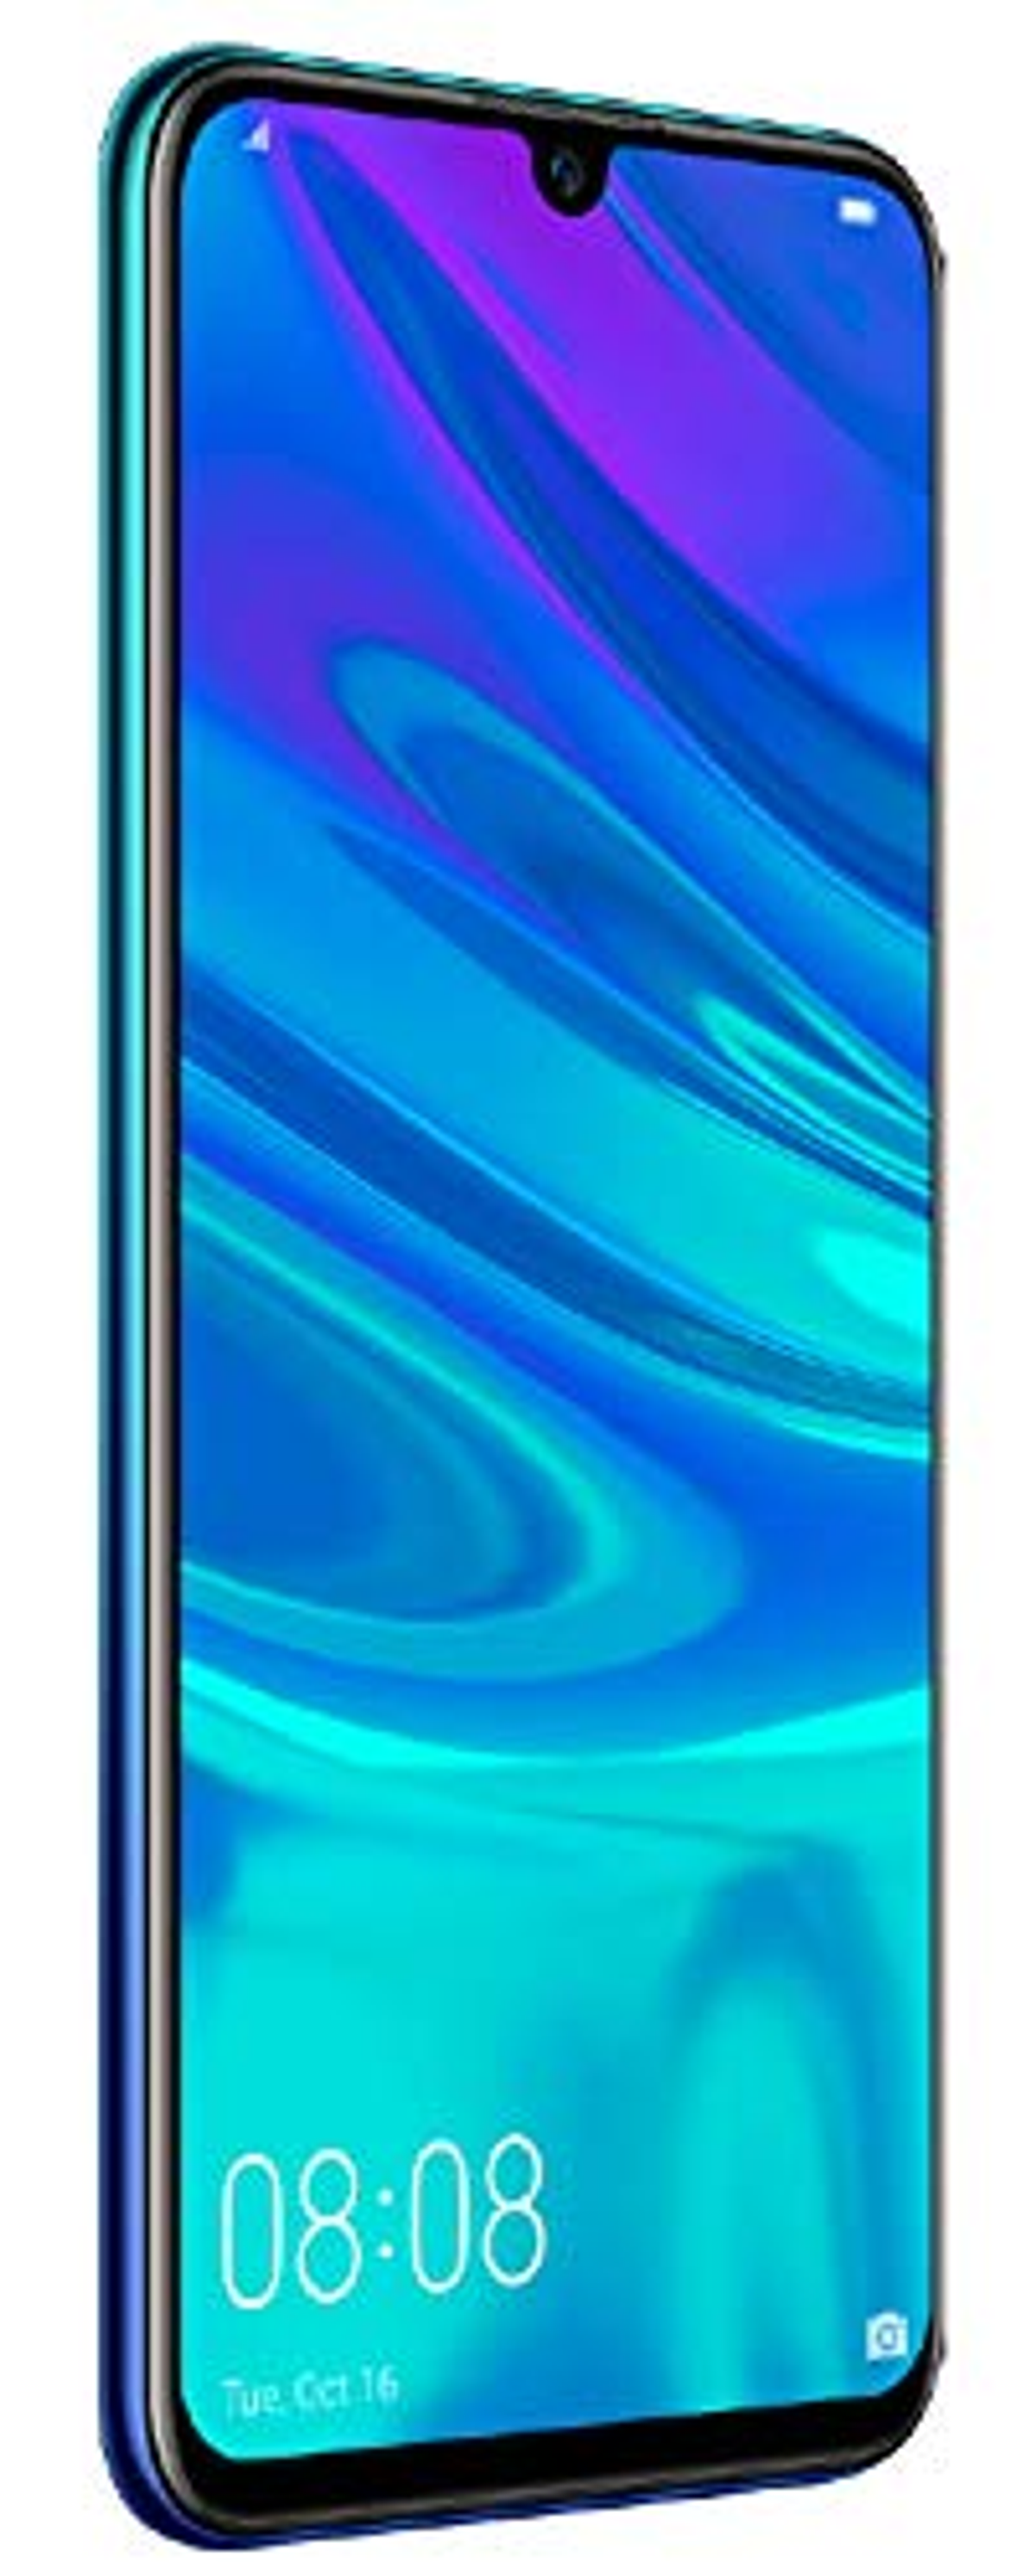 HUAWEI P (2019) Blue Dual SMART SIM 64 Aurora GB BLUE AURORA